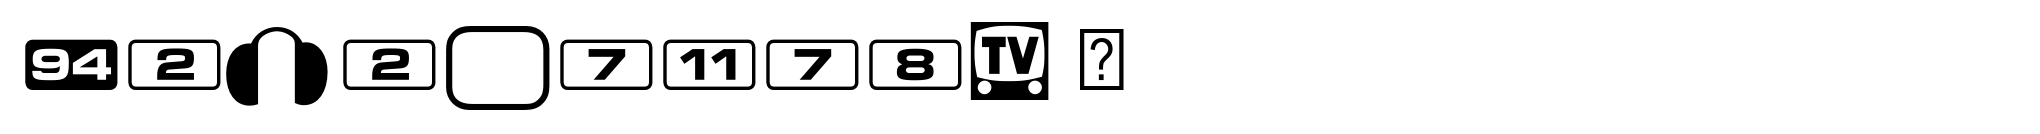 Television 2 image